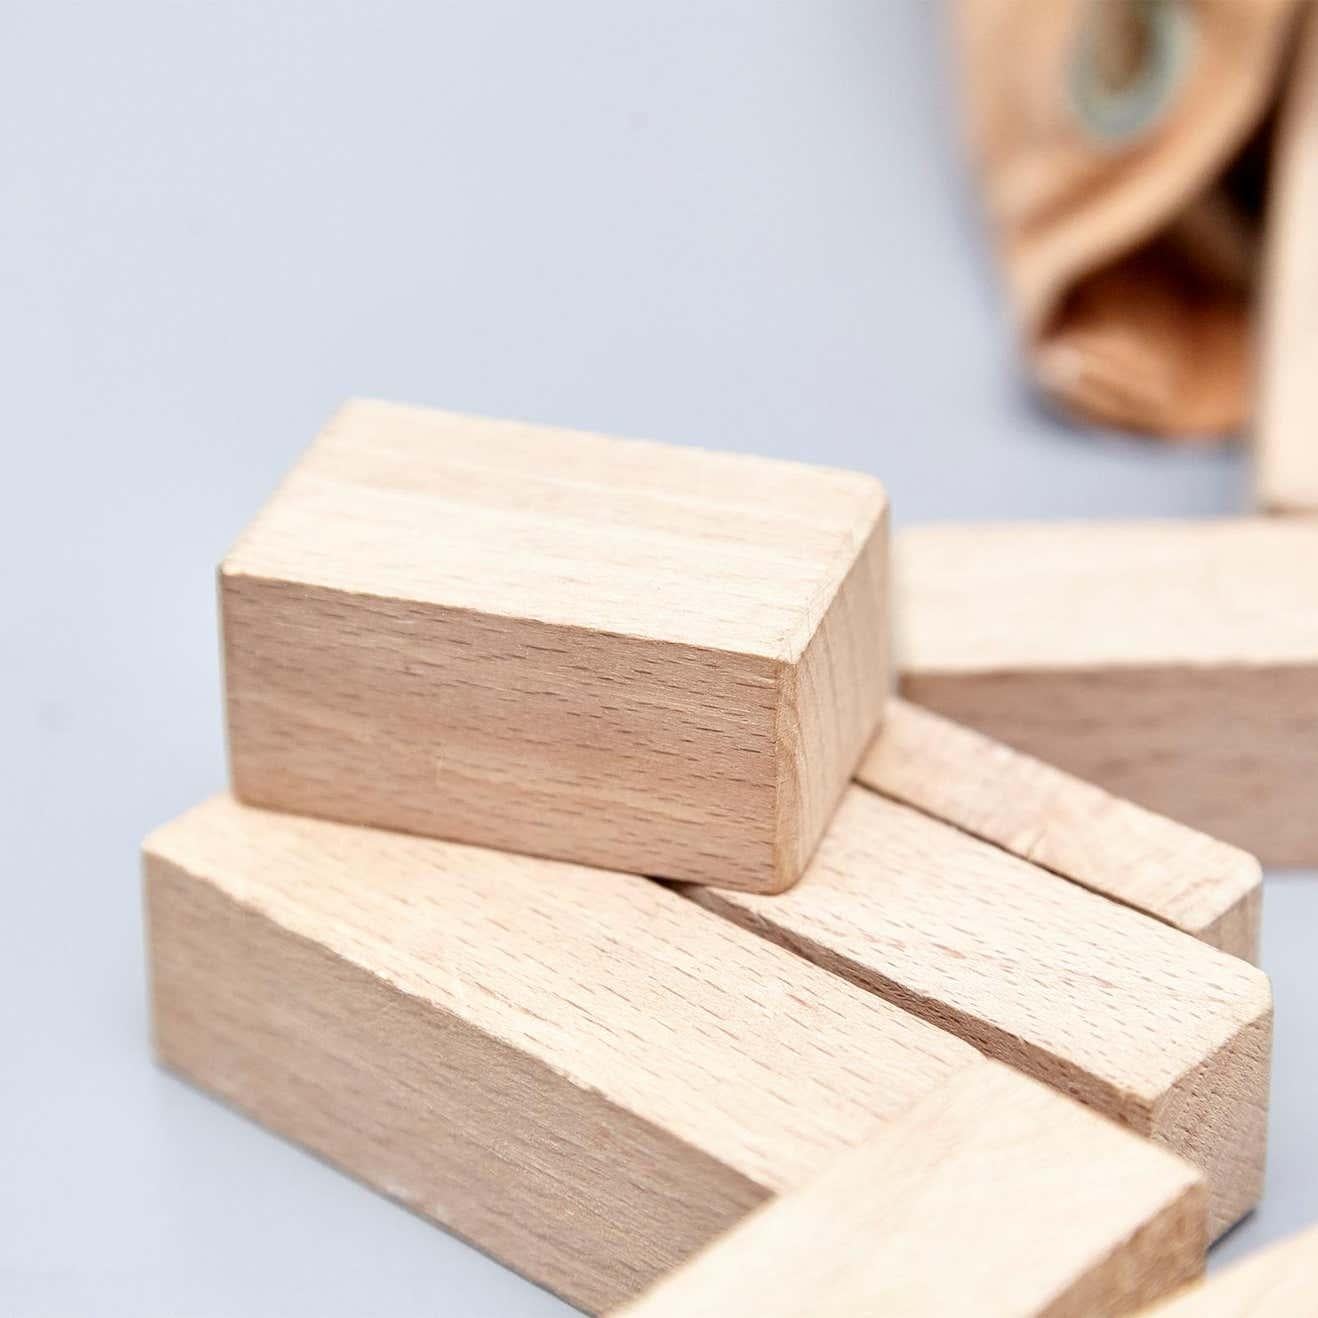 Ko Verzuu for Ado, Mid-Century Modern, Wood Blocks Construction Netherlands Toy For Sale 3